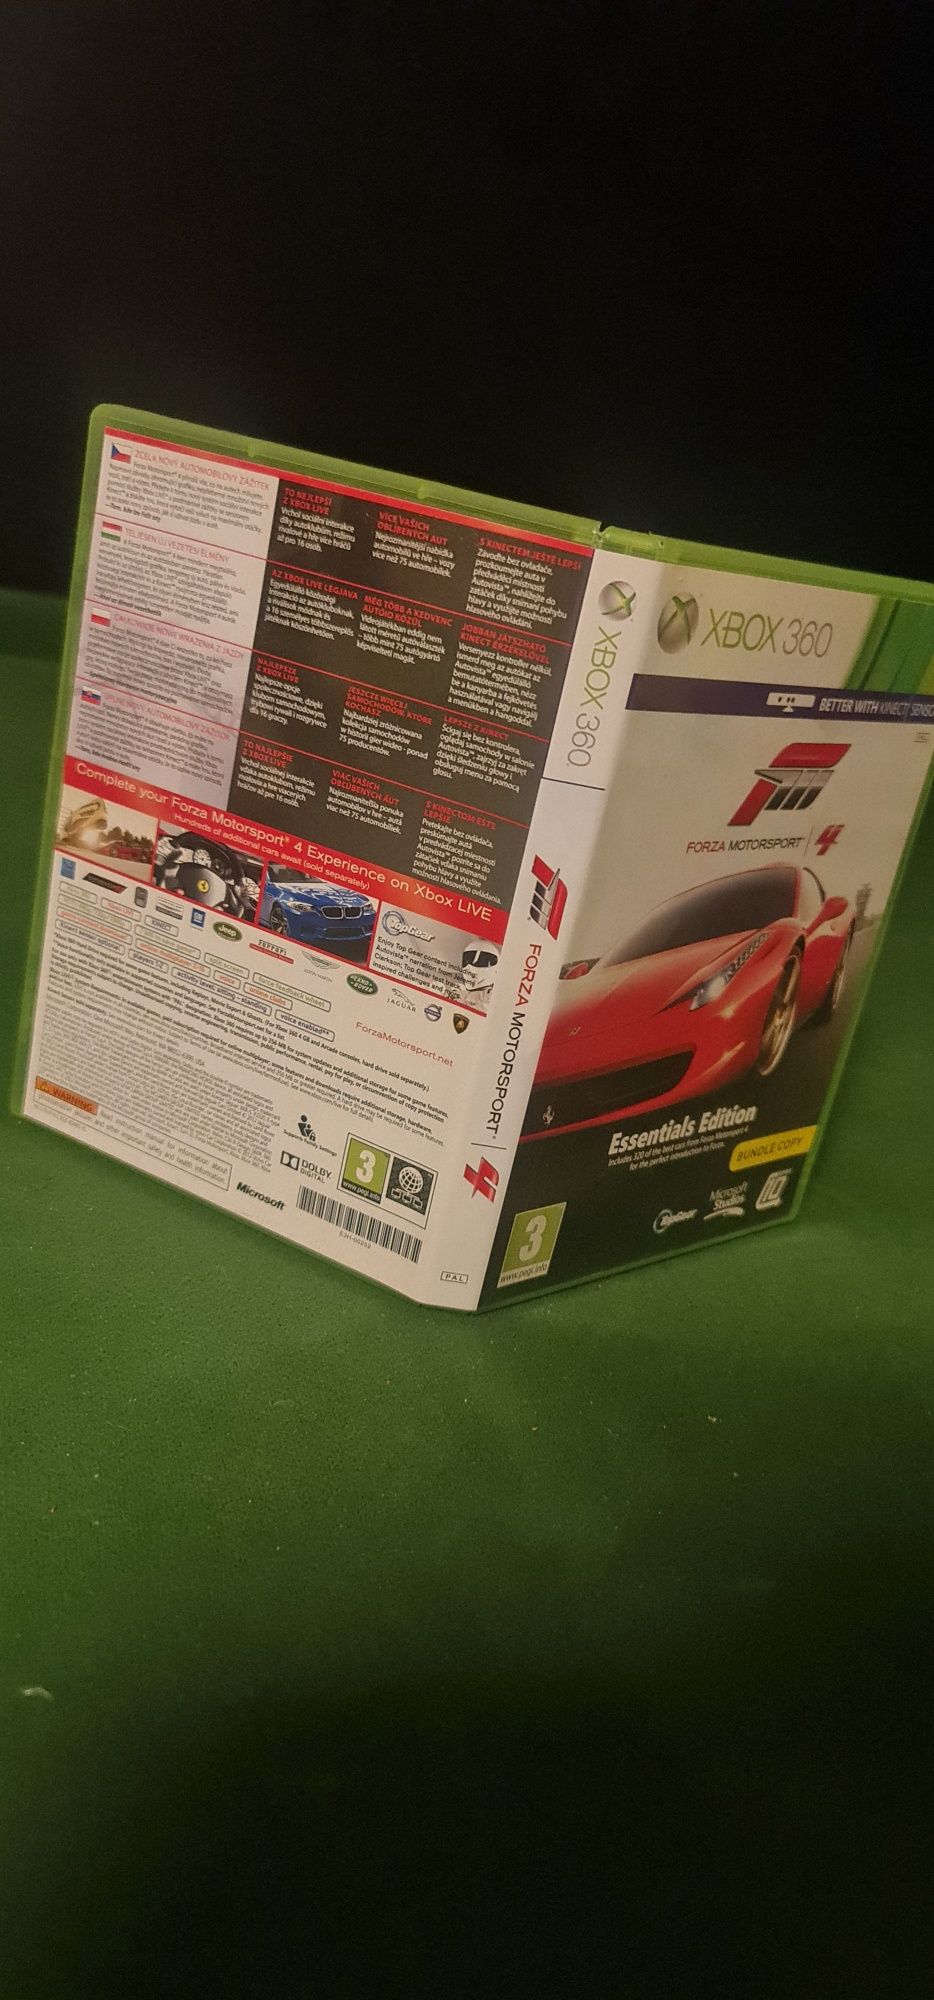 Forza Motorsport 4 essentials Edition xboxn360 po polsku